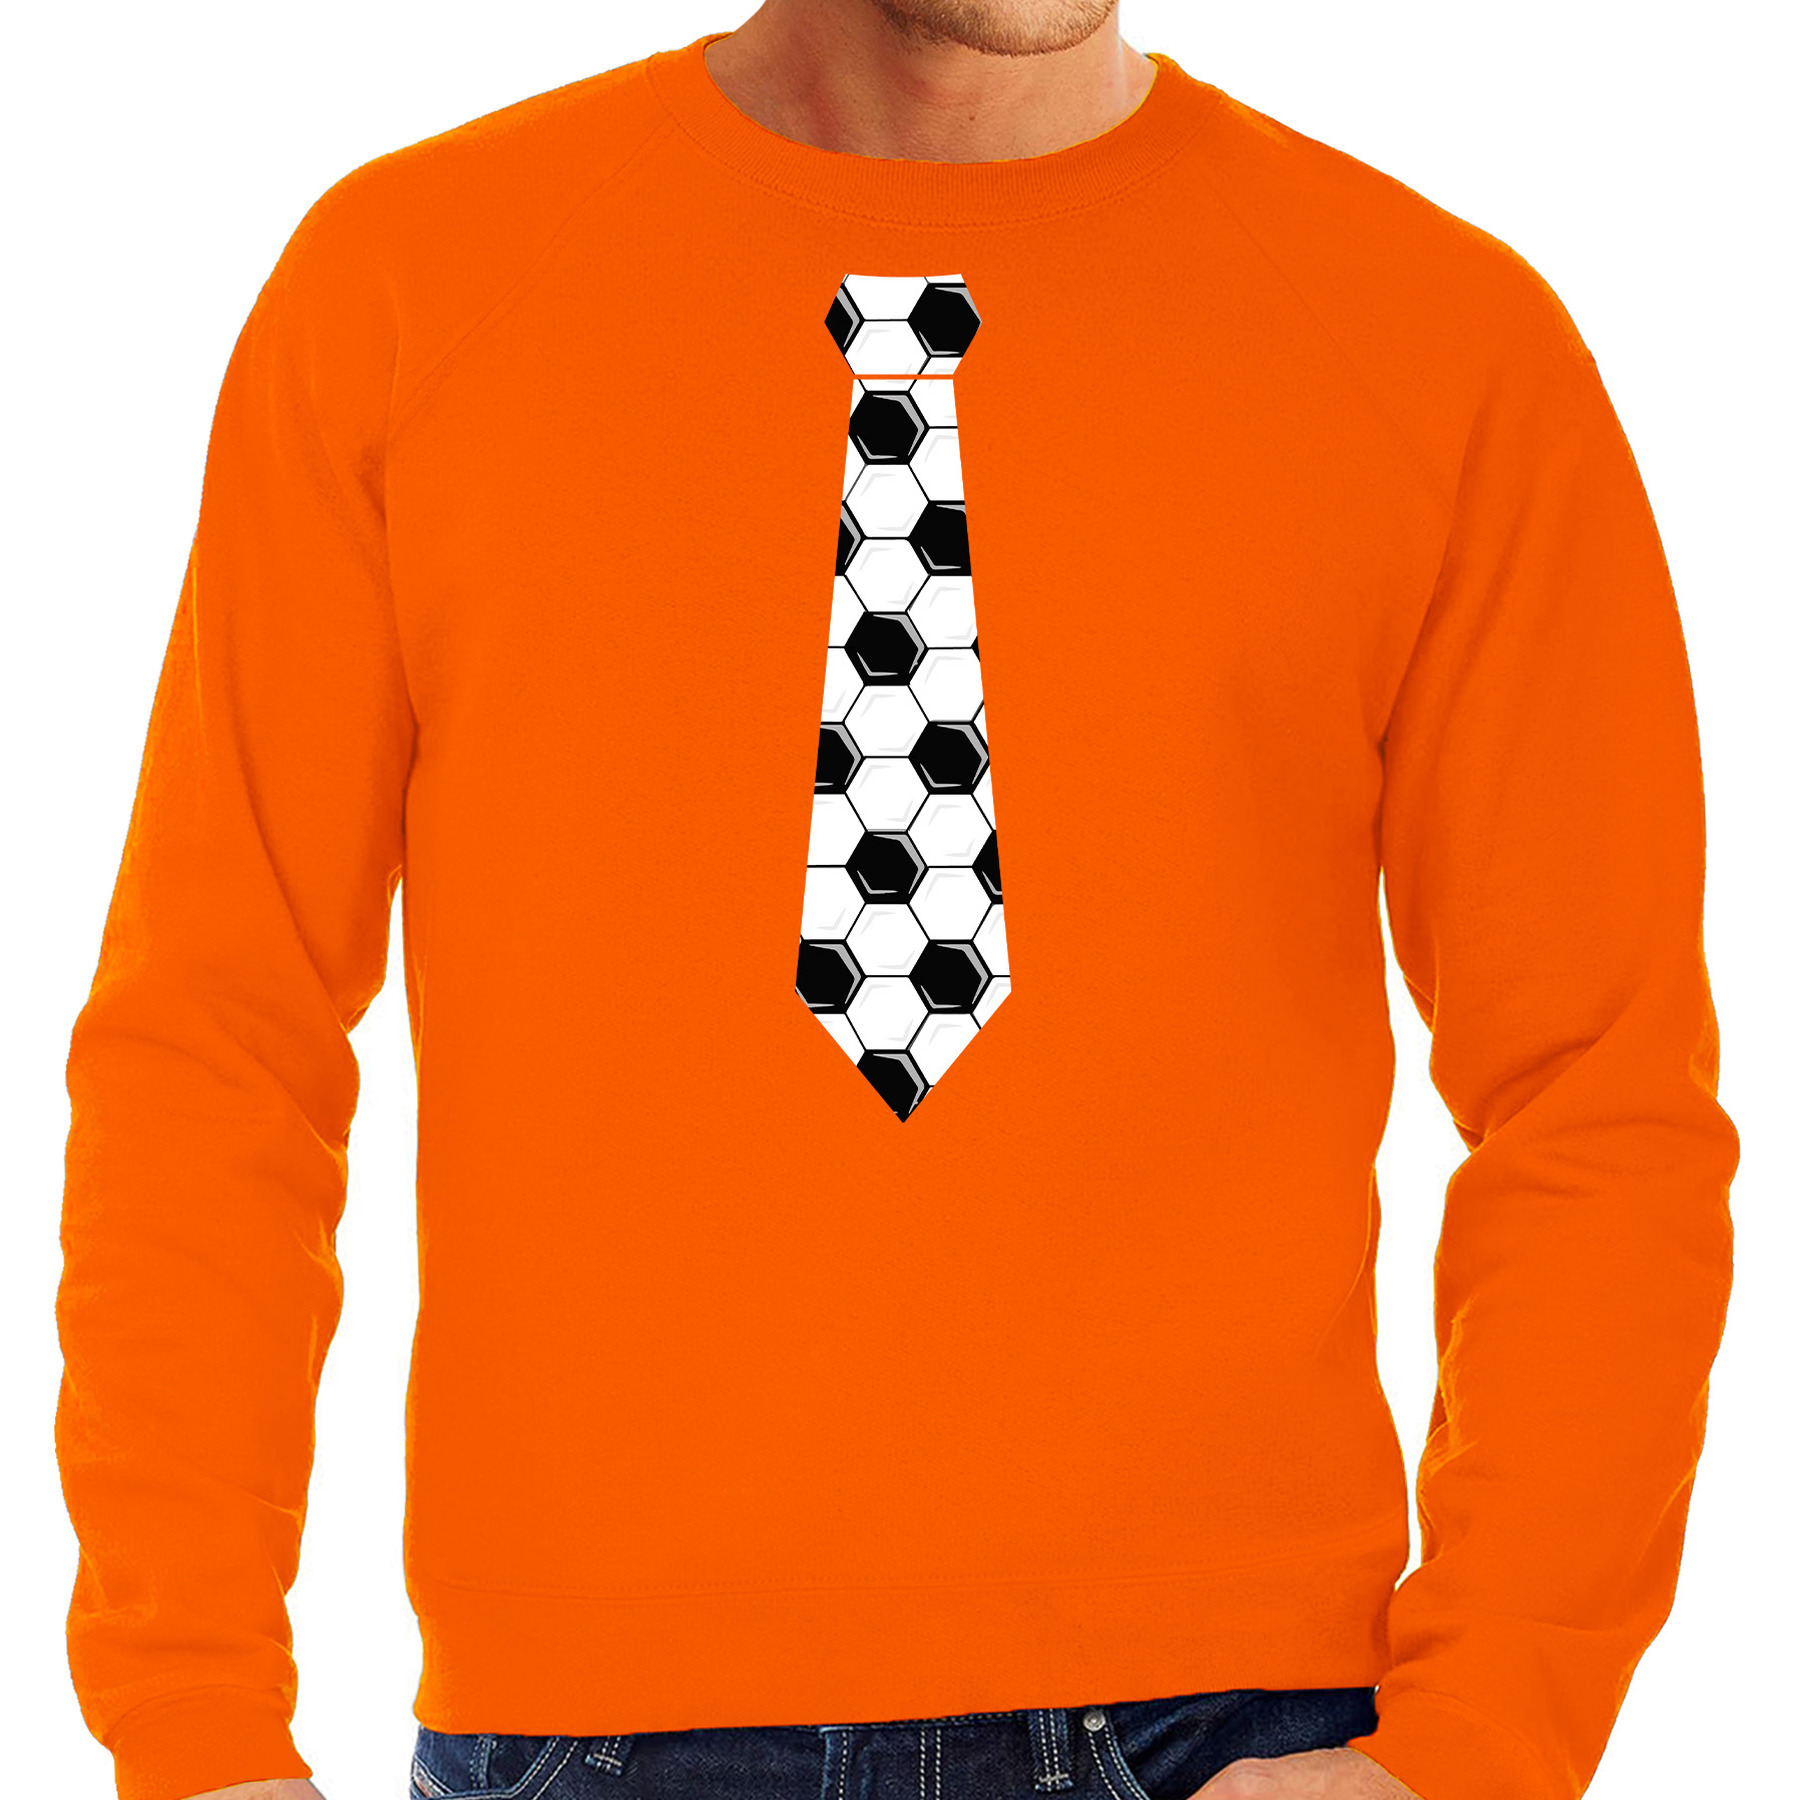 Oranje sweater-trui Holland-Nederland supporter voetbal stropdas EK- WK voor heren